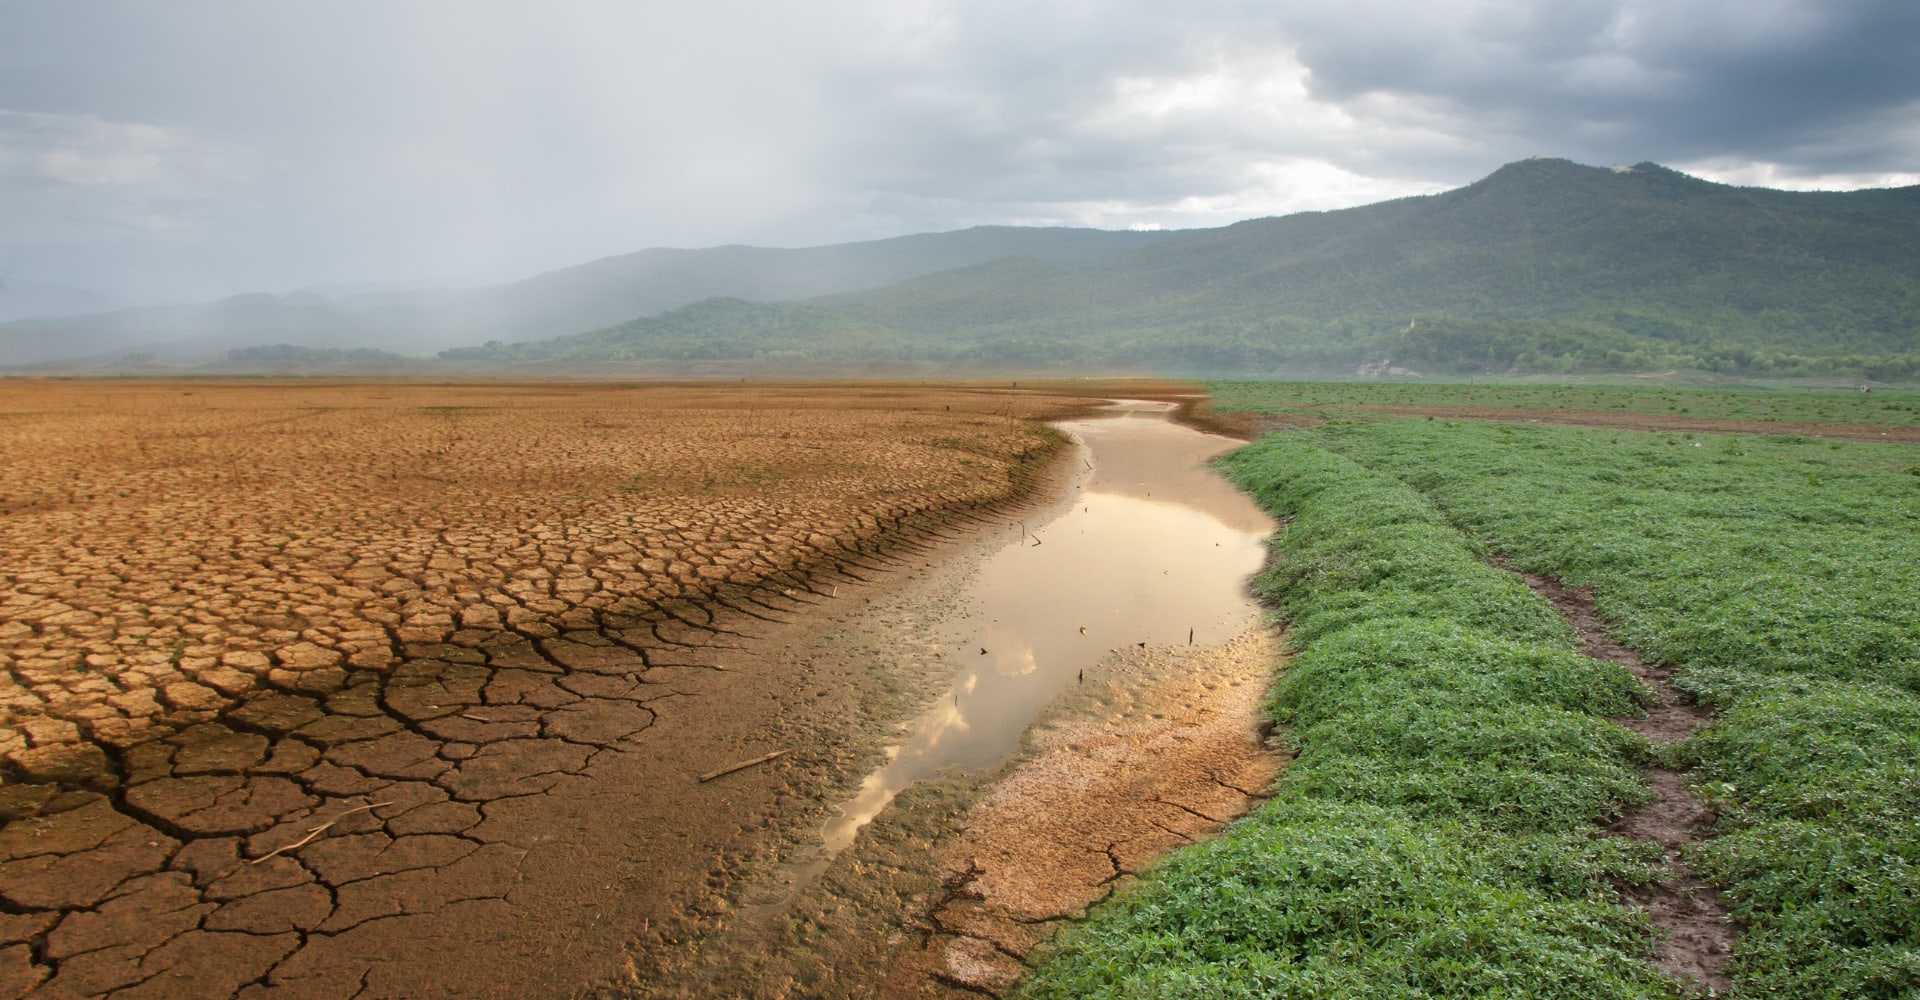 Dürre Landschaft durch Klimawandel bedroht